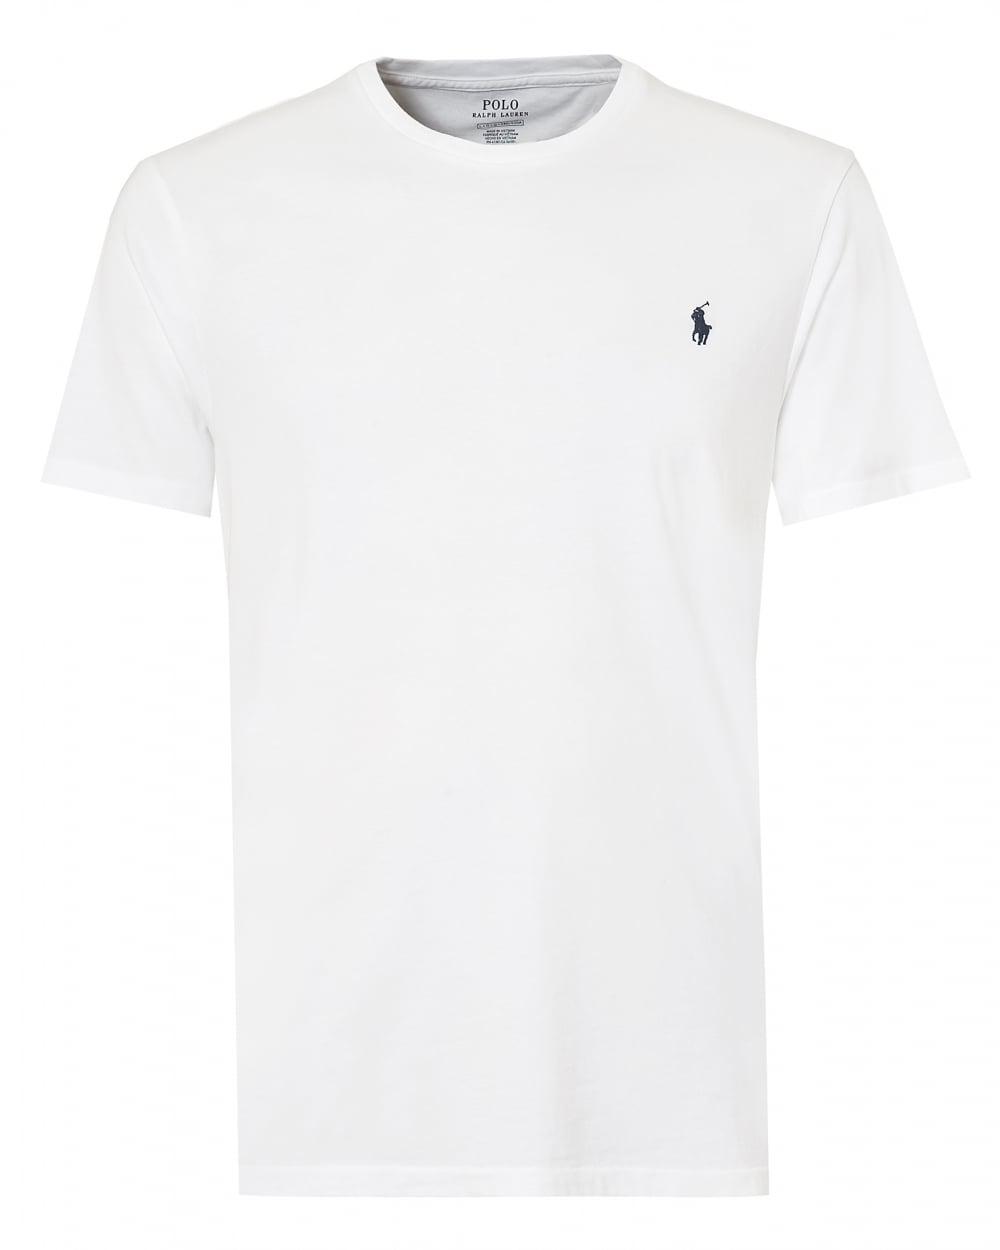 Ralph Lauren Cotton Plain T-shirt, White Short Sleeve Tee for Men - Lyst